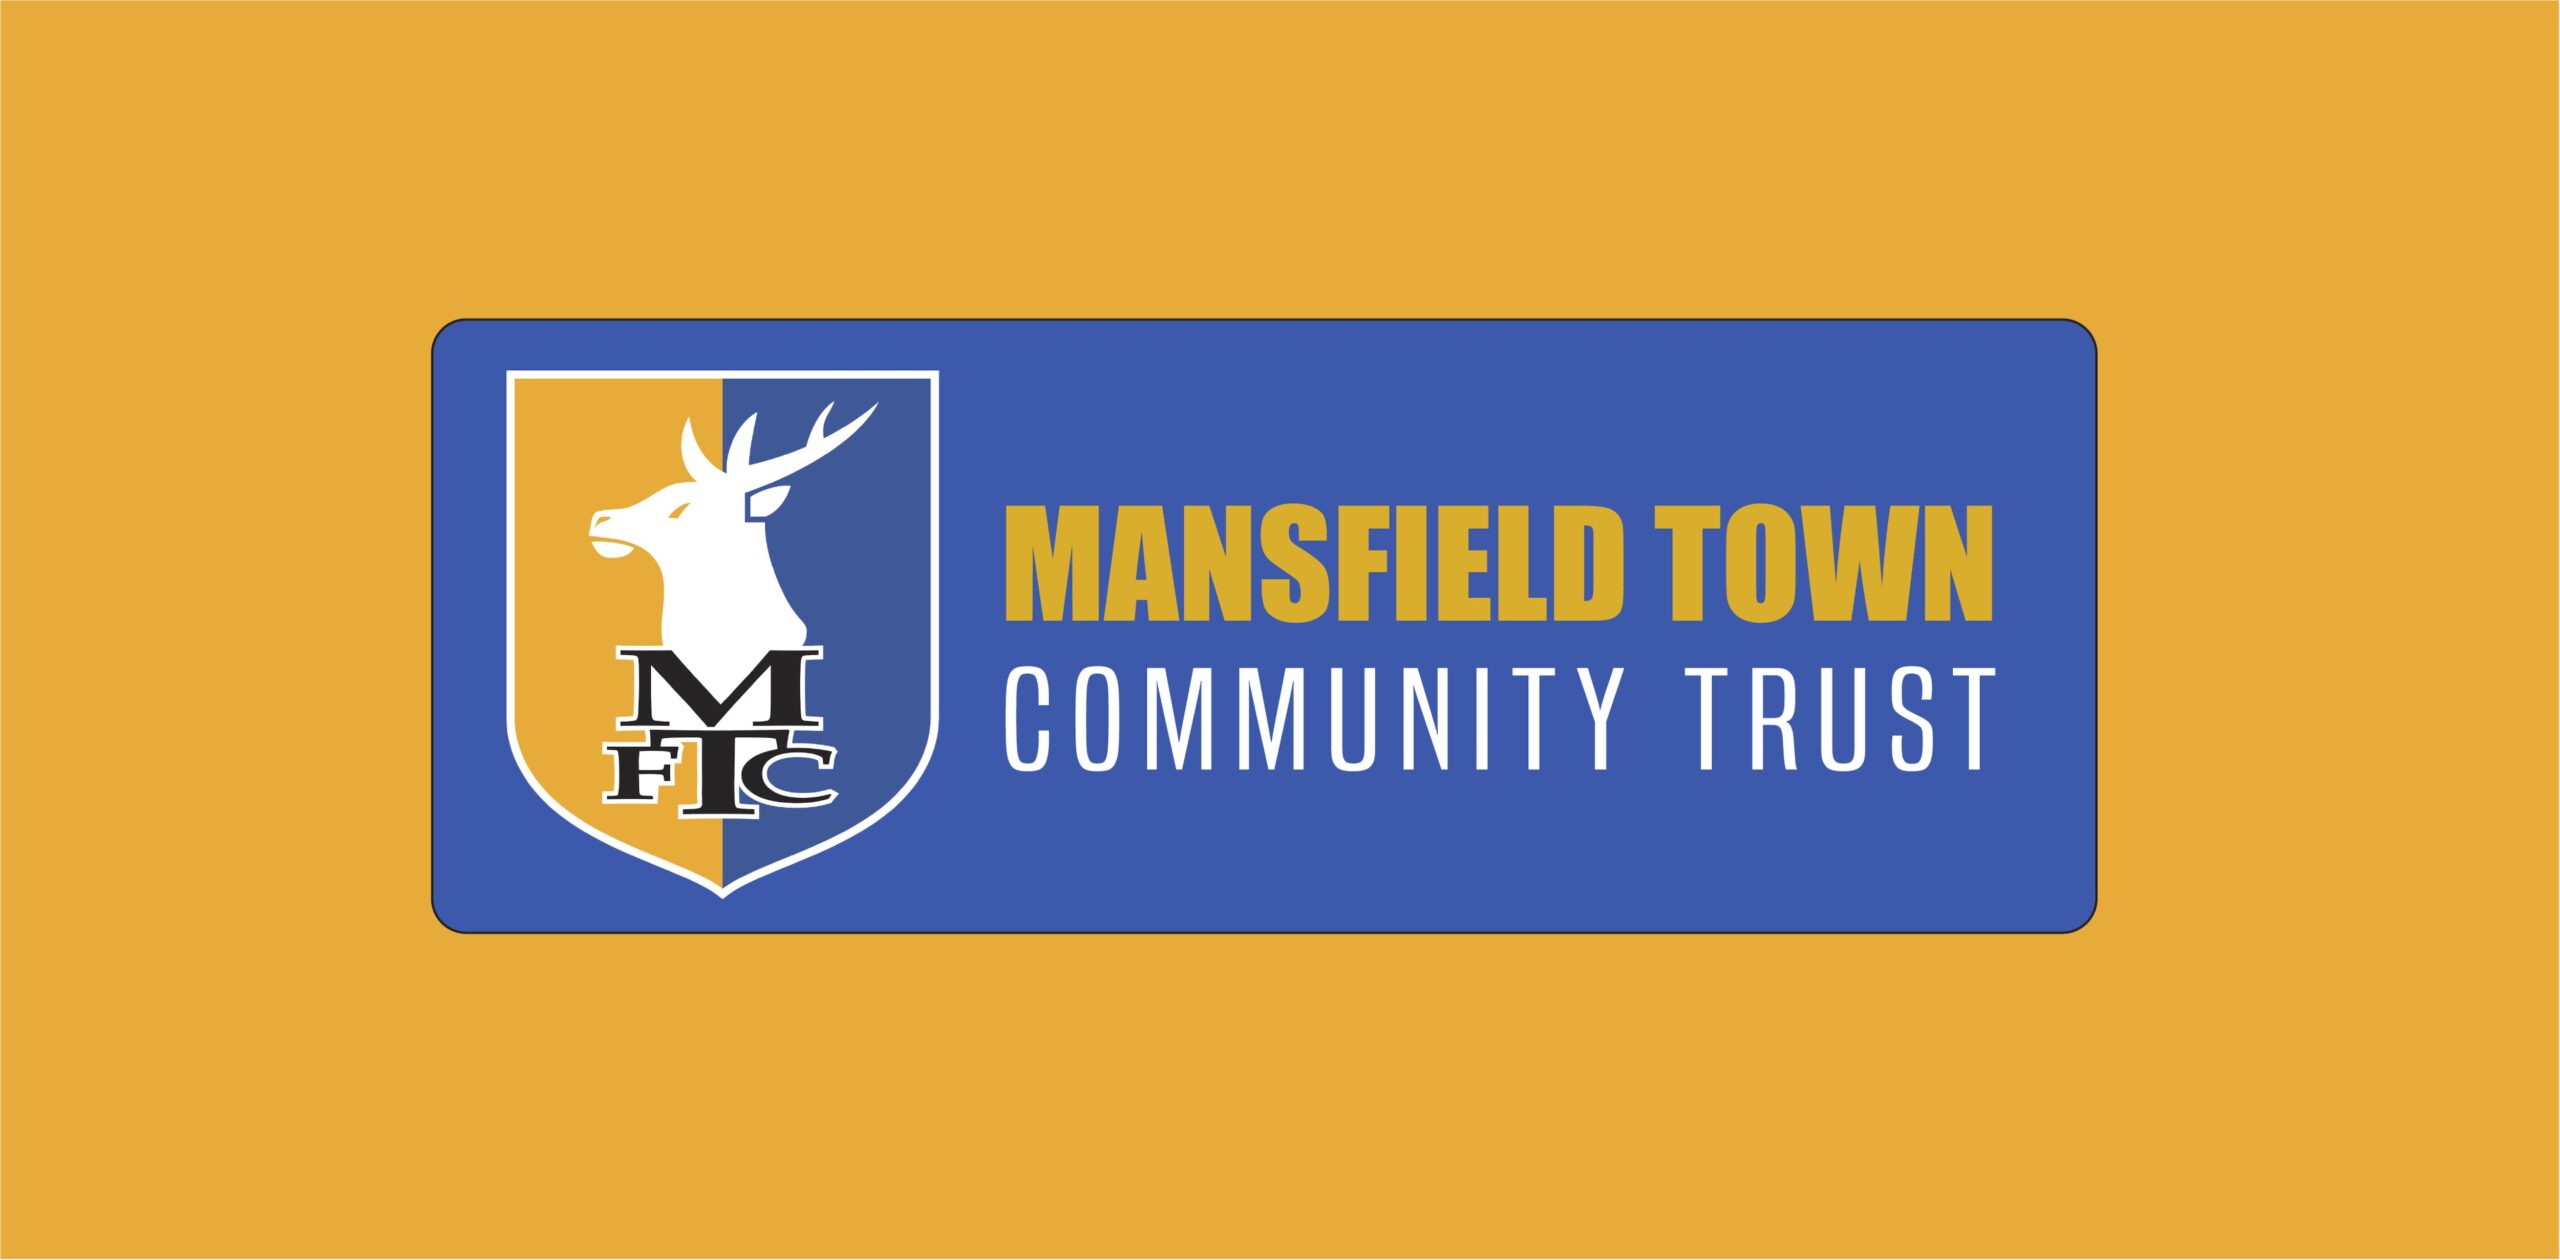 Mansfield Town Community Trust